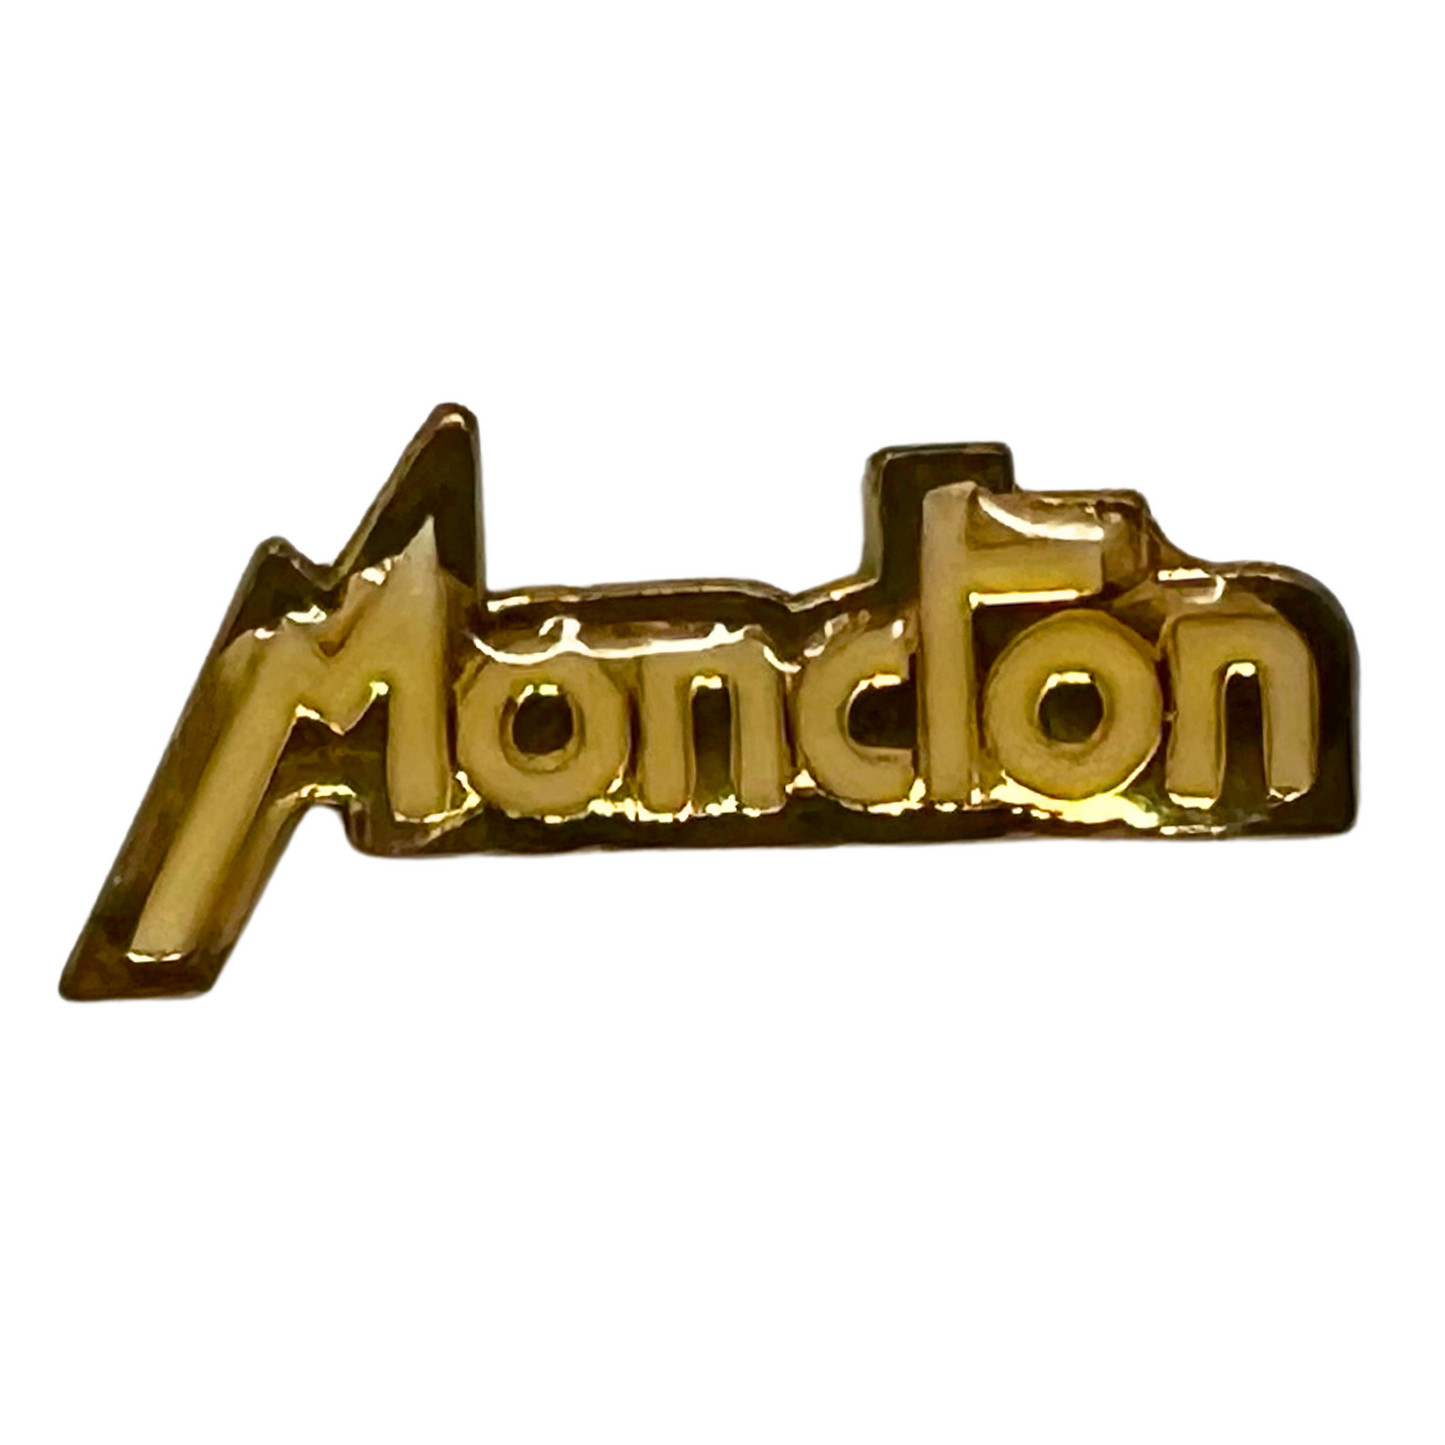 Moncton New Brunswick Souvenir Cities & States Lapel Pin SP6 V19